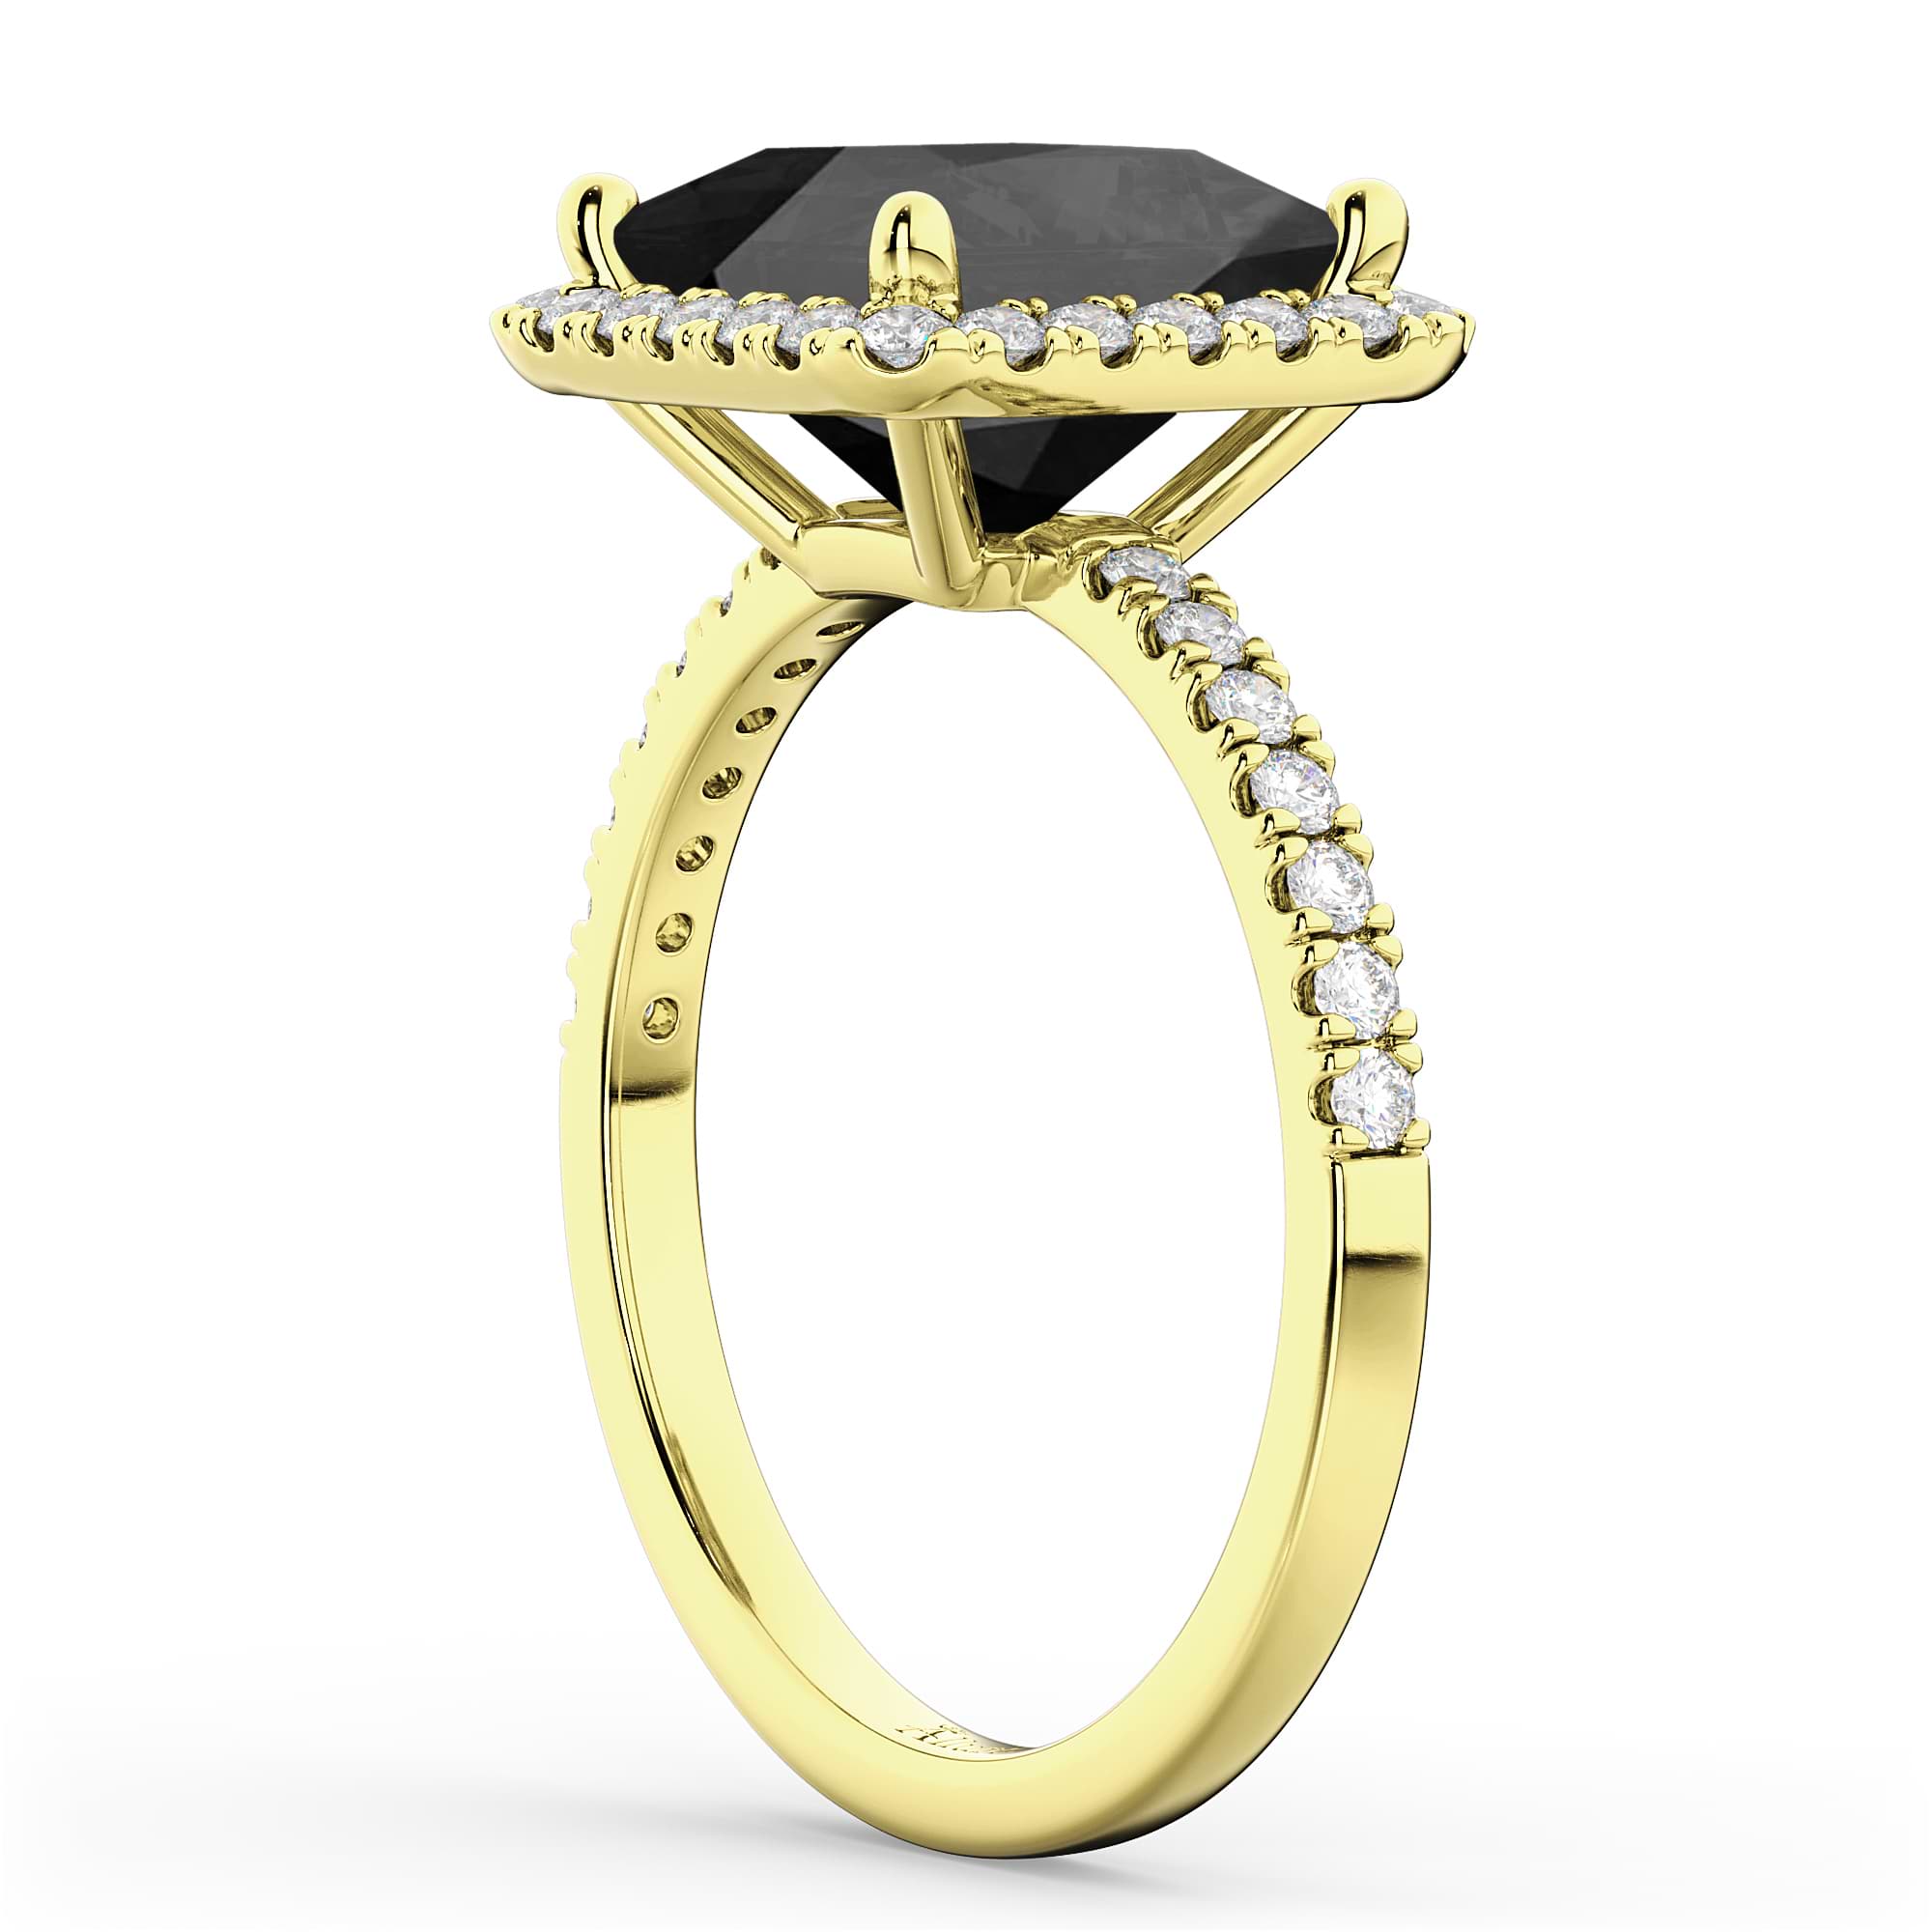 Princess Cut Halo Black Onyx & Diamond Engagement Ring 14K Yellow Gold 3.47ct